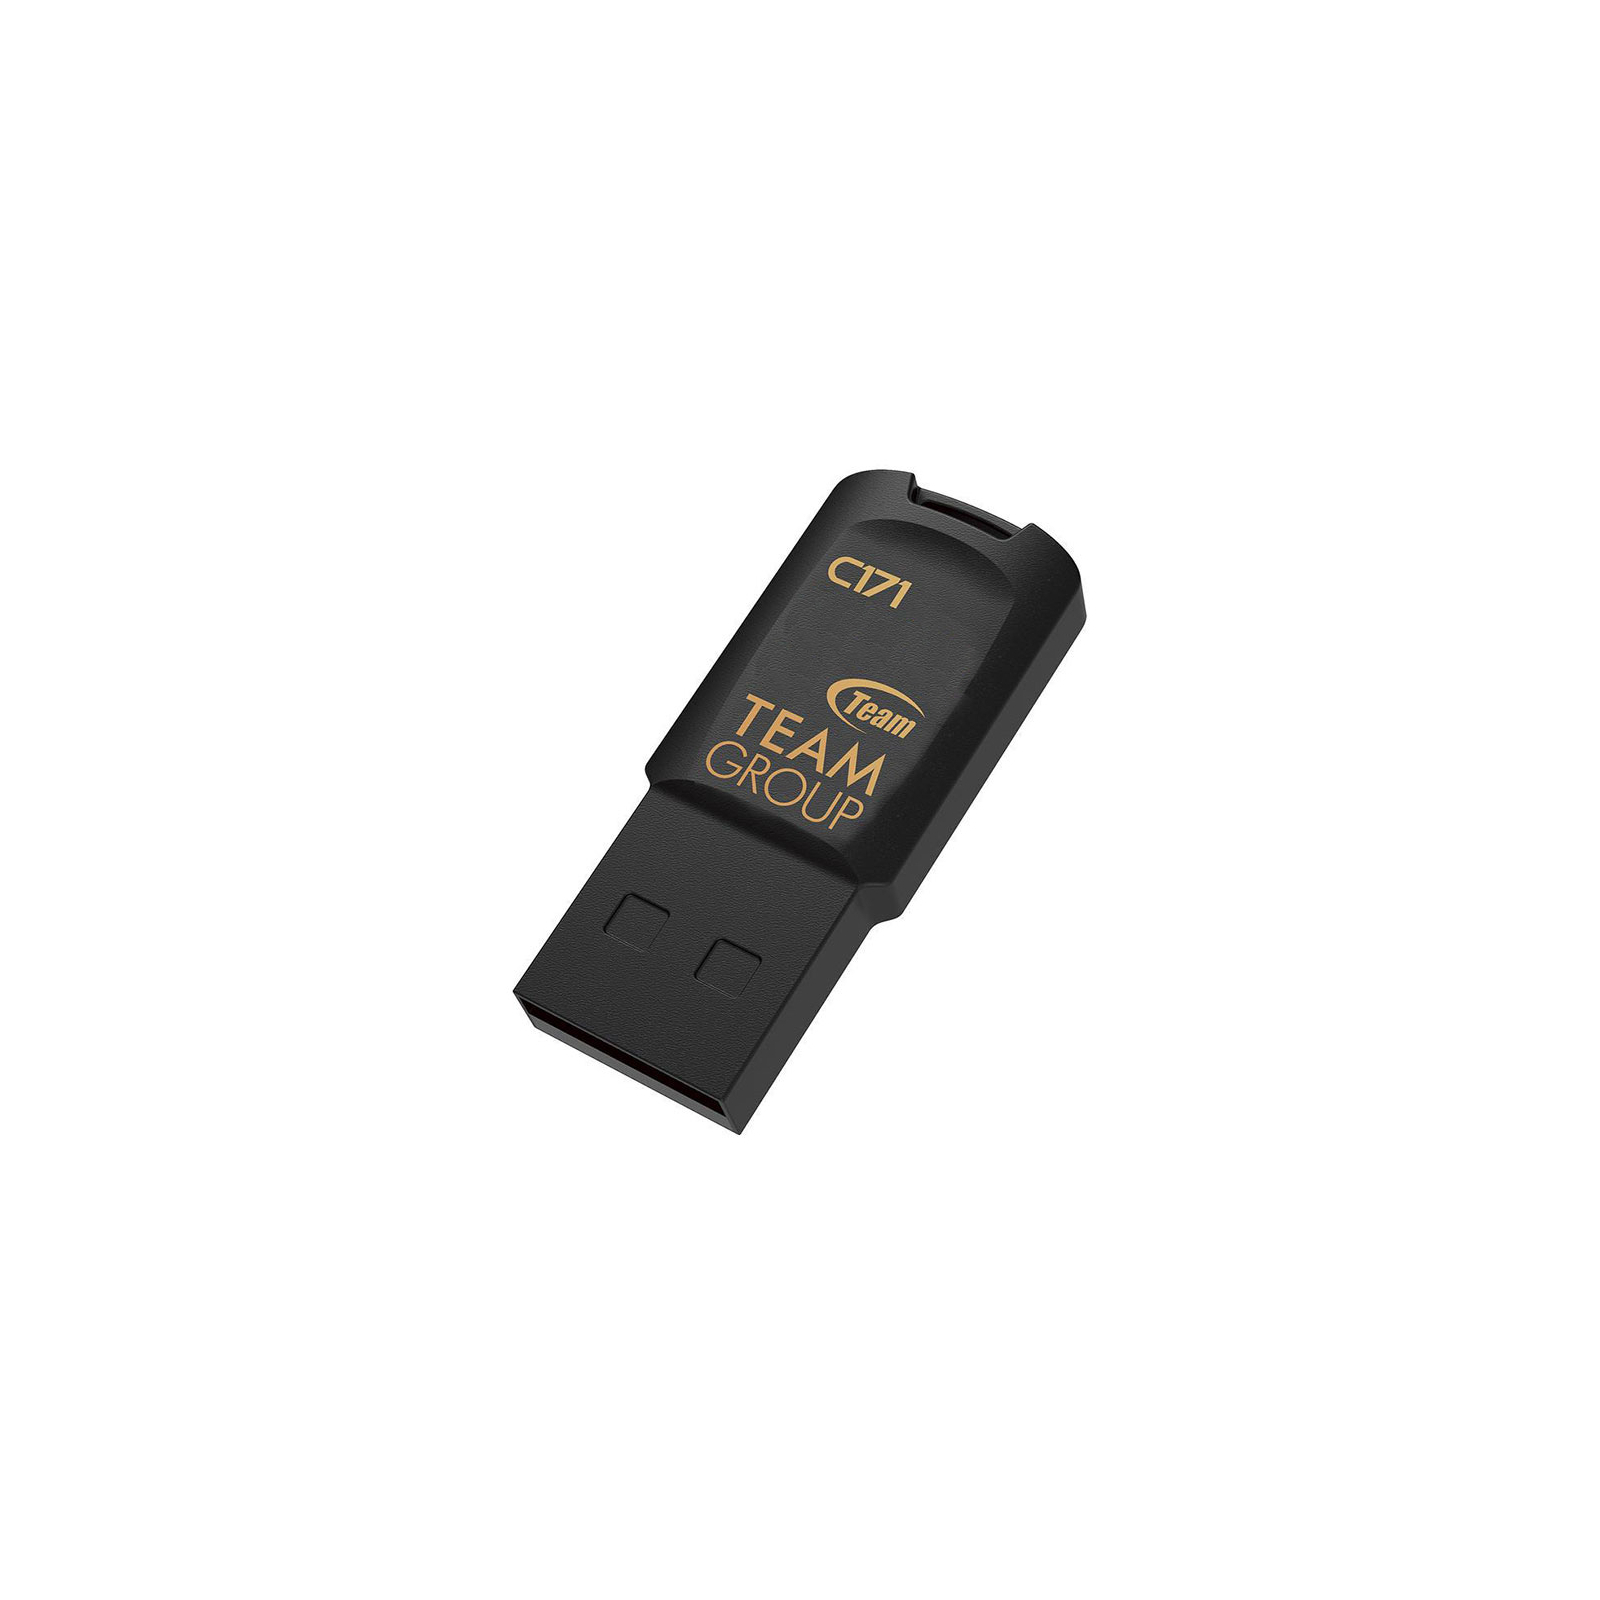 USB флеш накопитель Team 16GB C171 White USB 2.0 (TC17116GW01) изображение 2